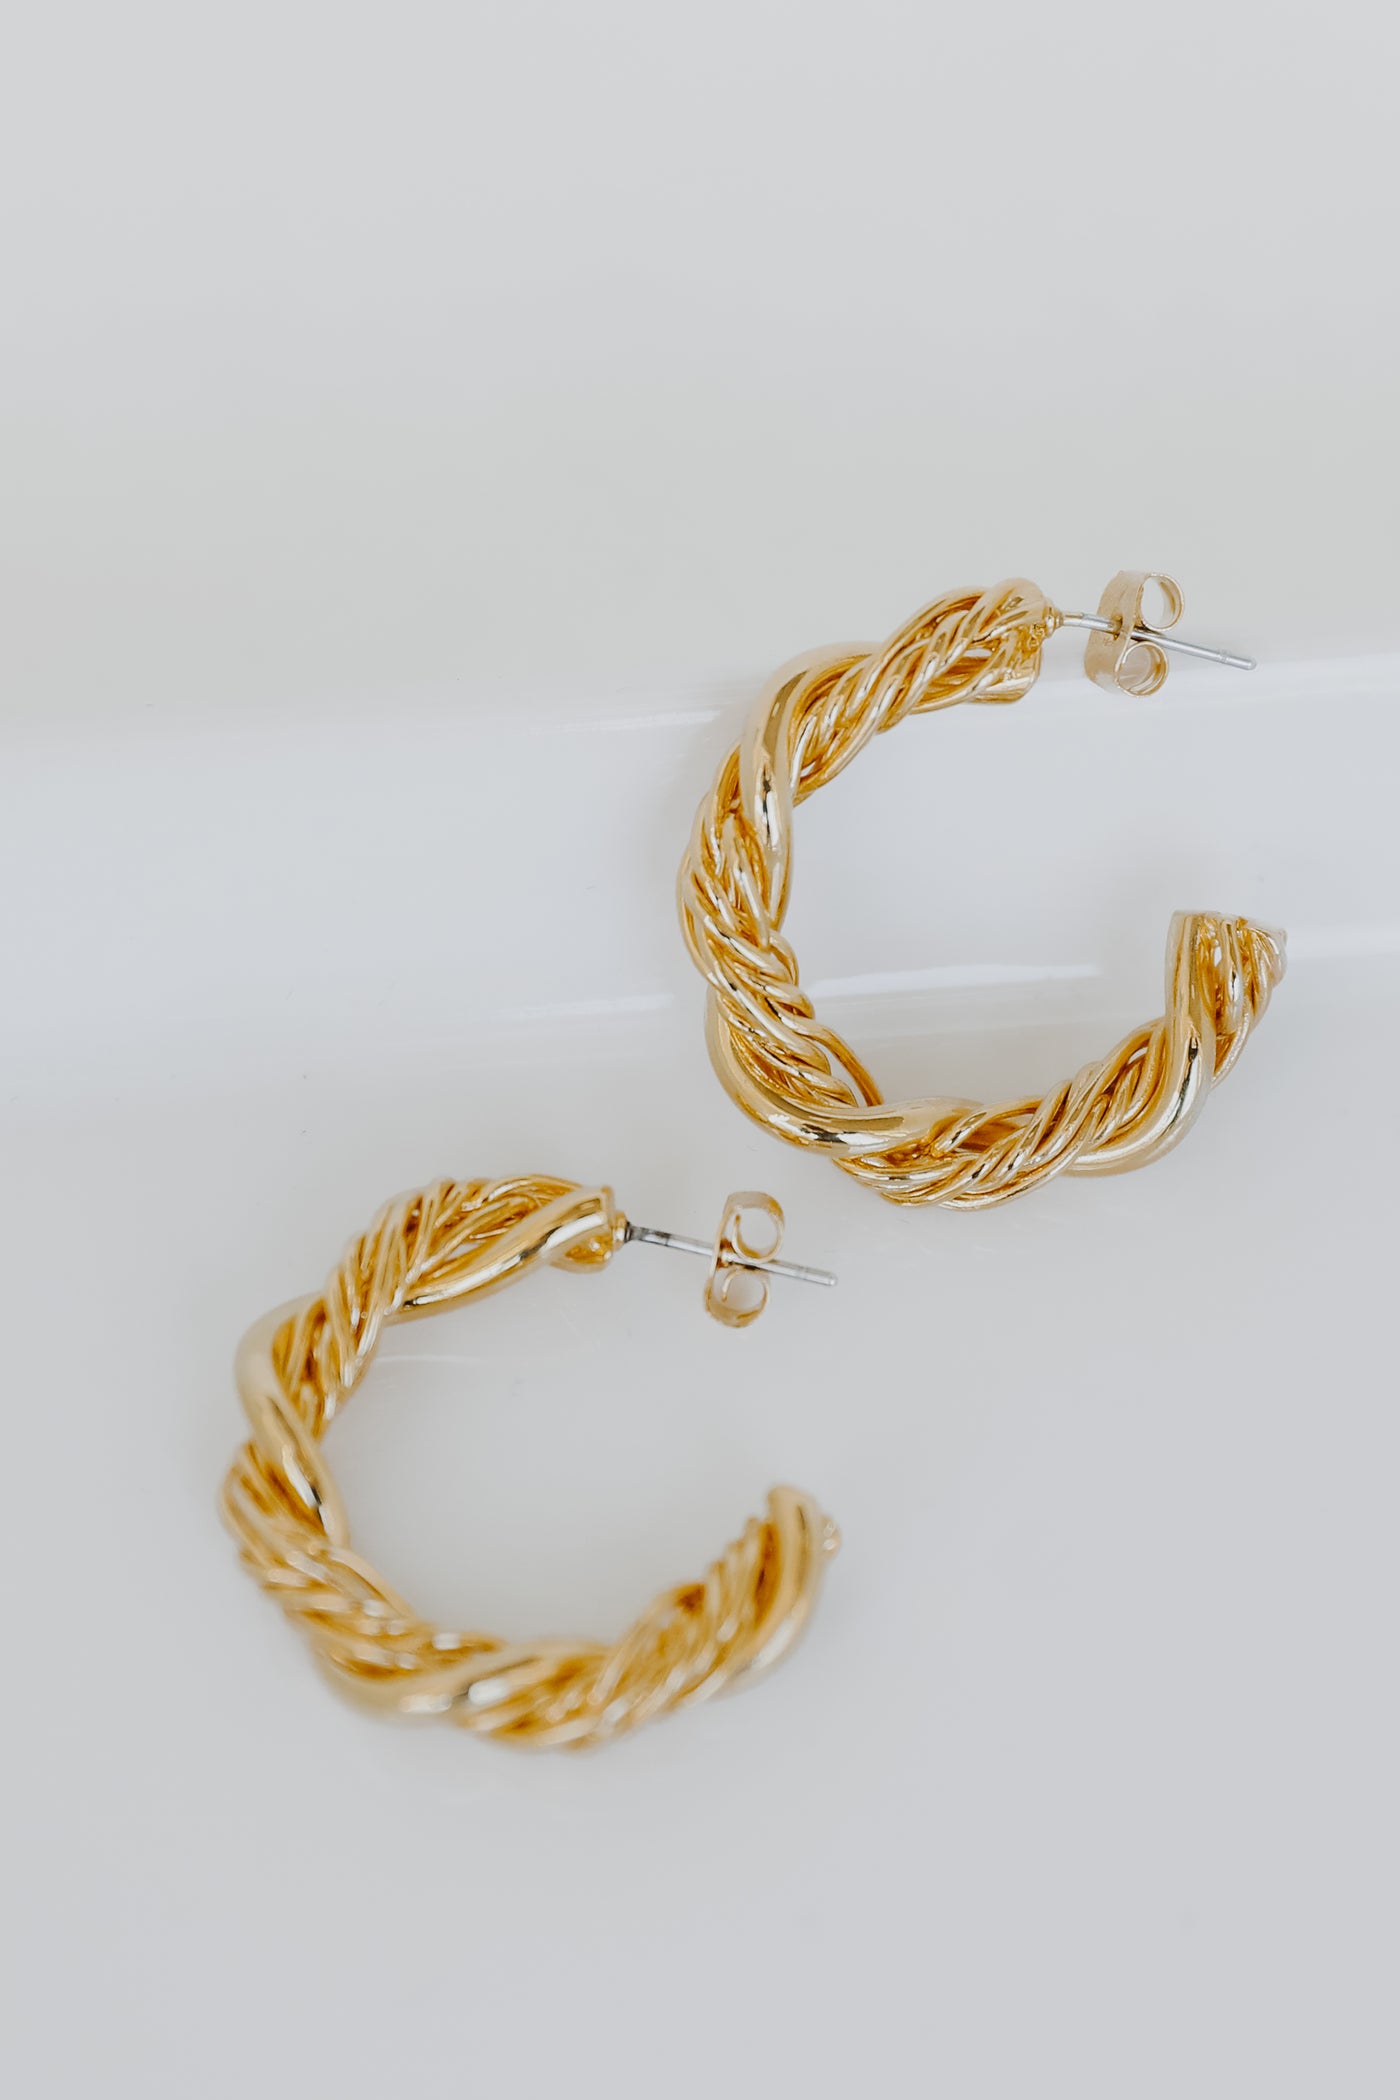 Gold Twisted Hoop Earrings flat lay